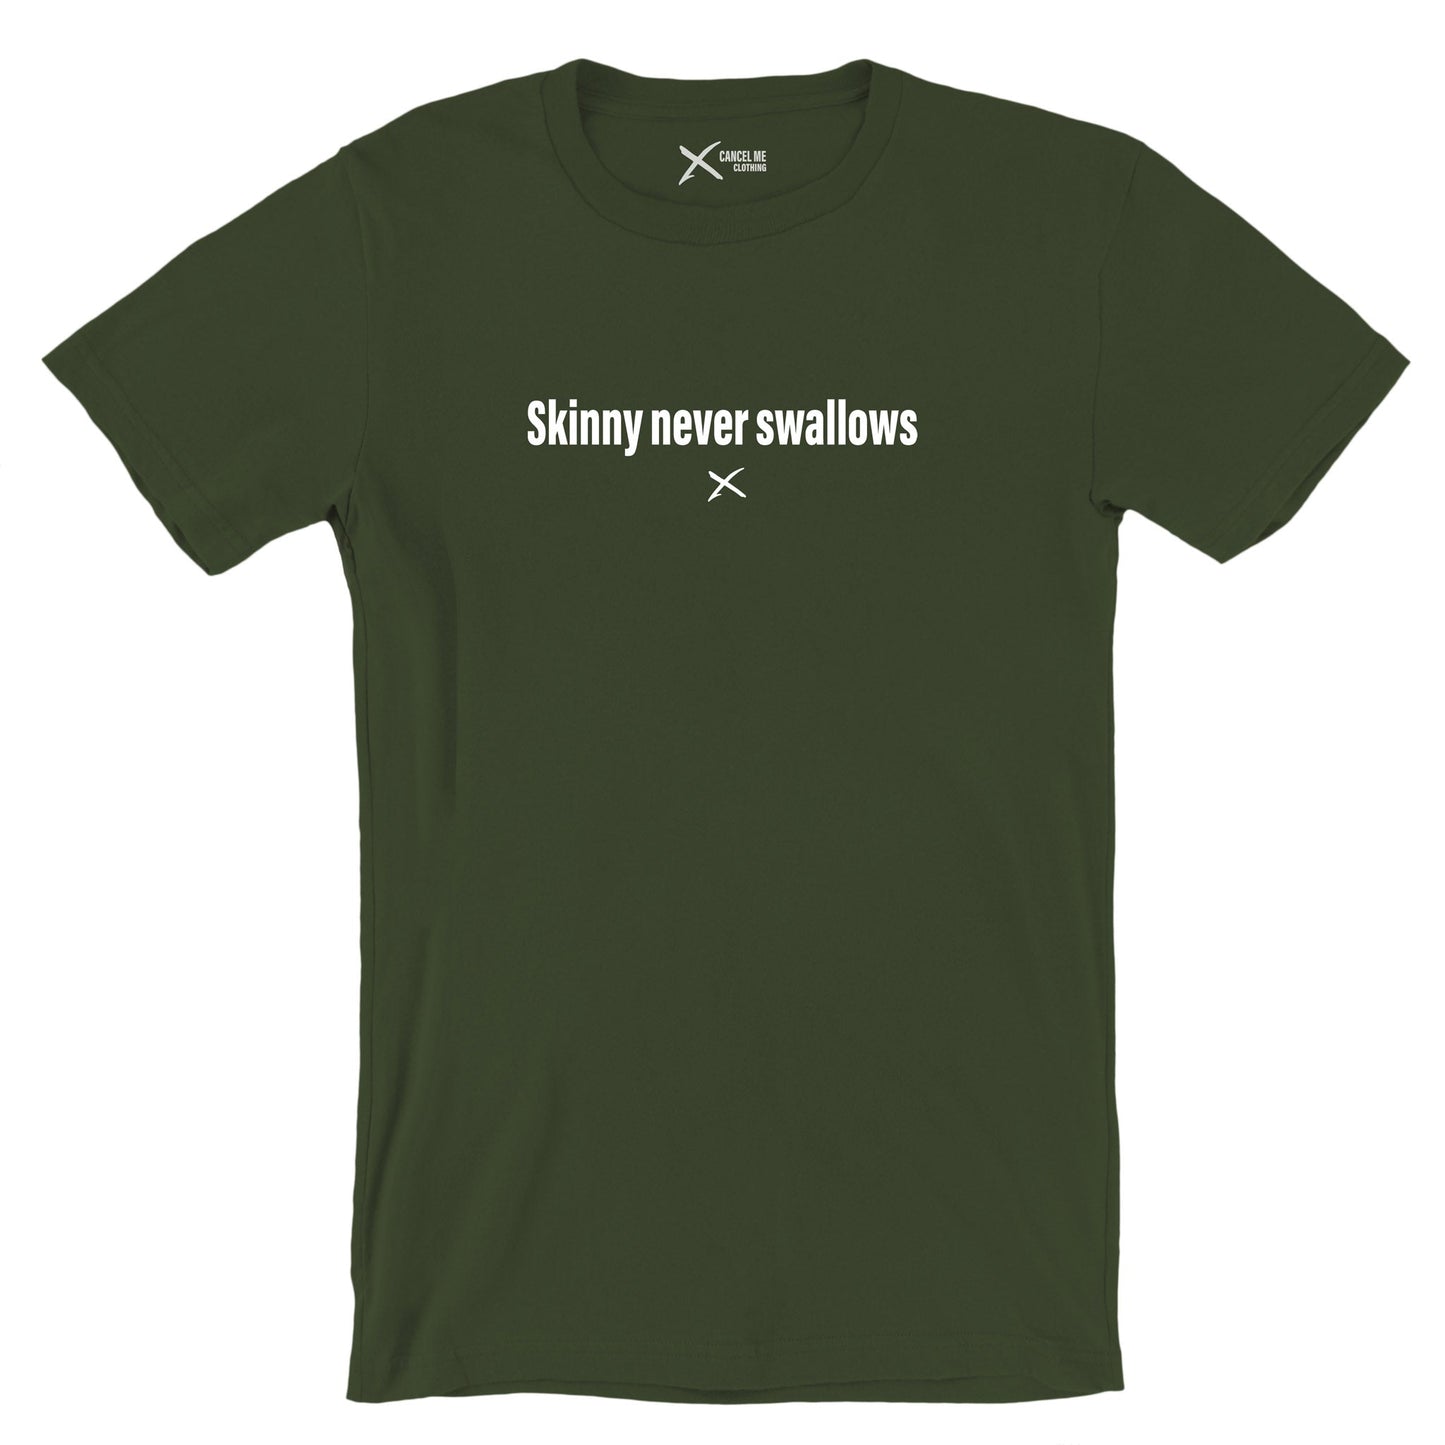 Skinny never swallows - Shirt